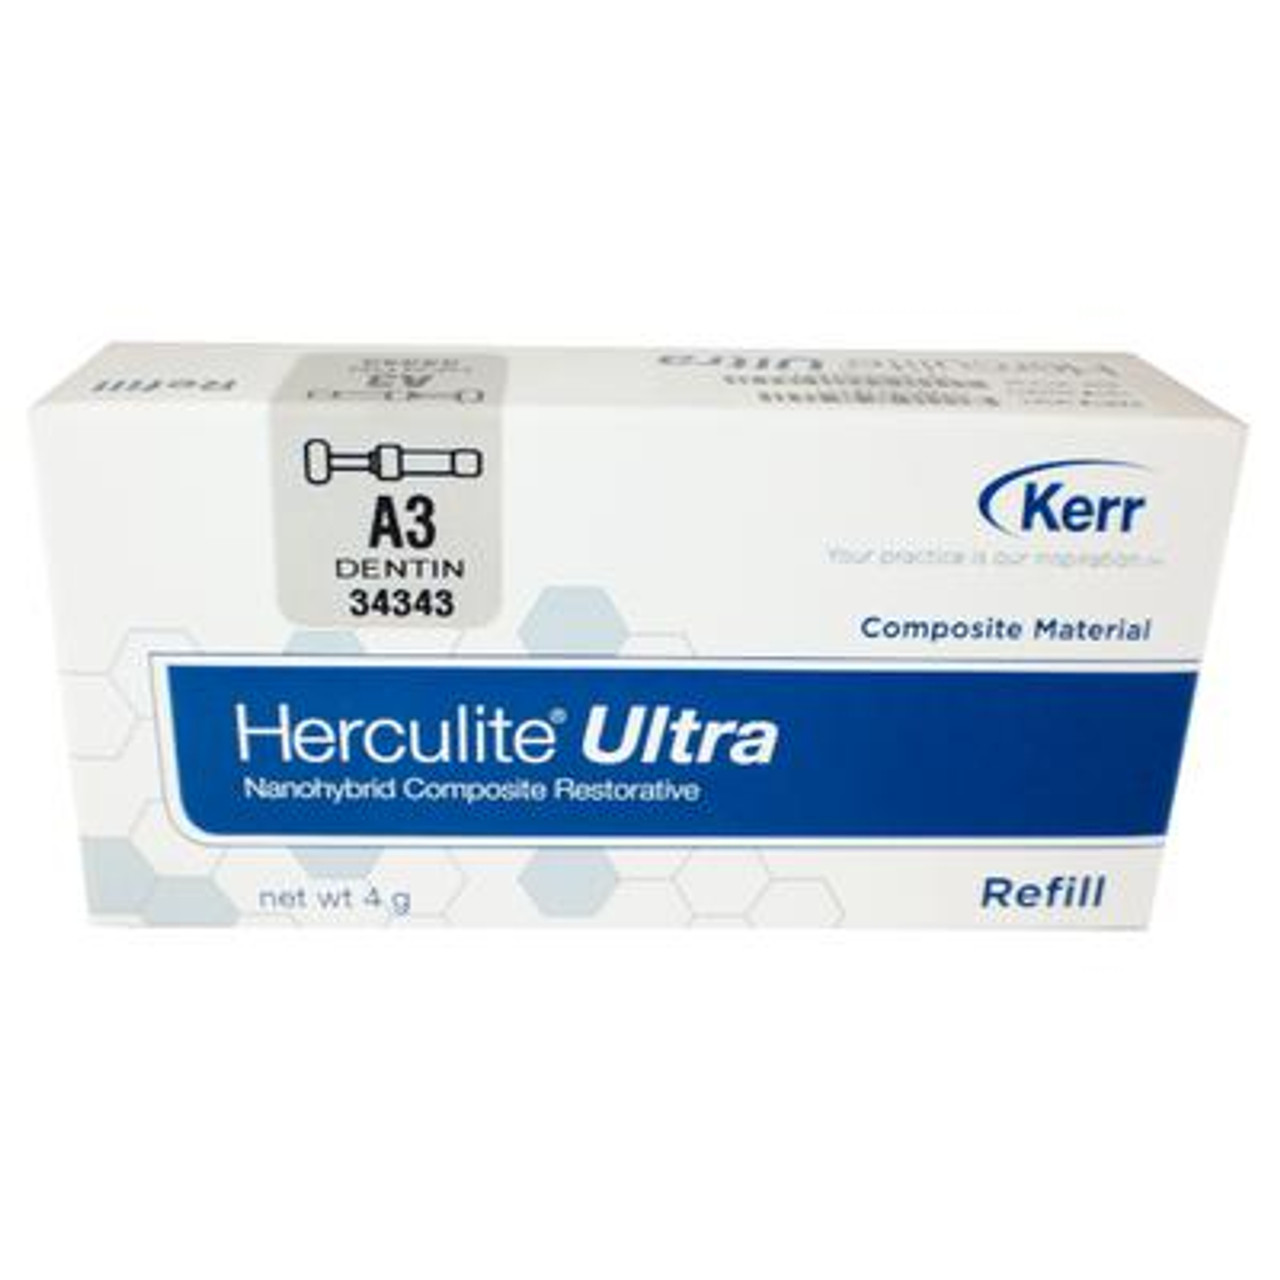 Kerr Herculite Ultra Refill A3 Dentin Syringe ea